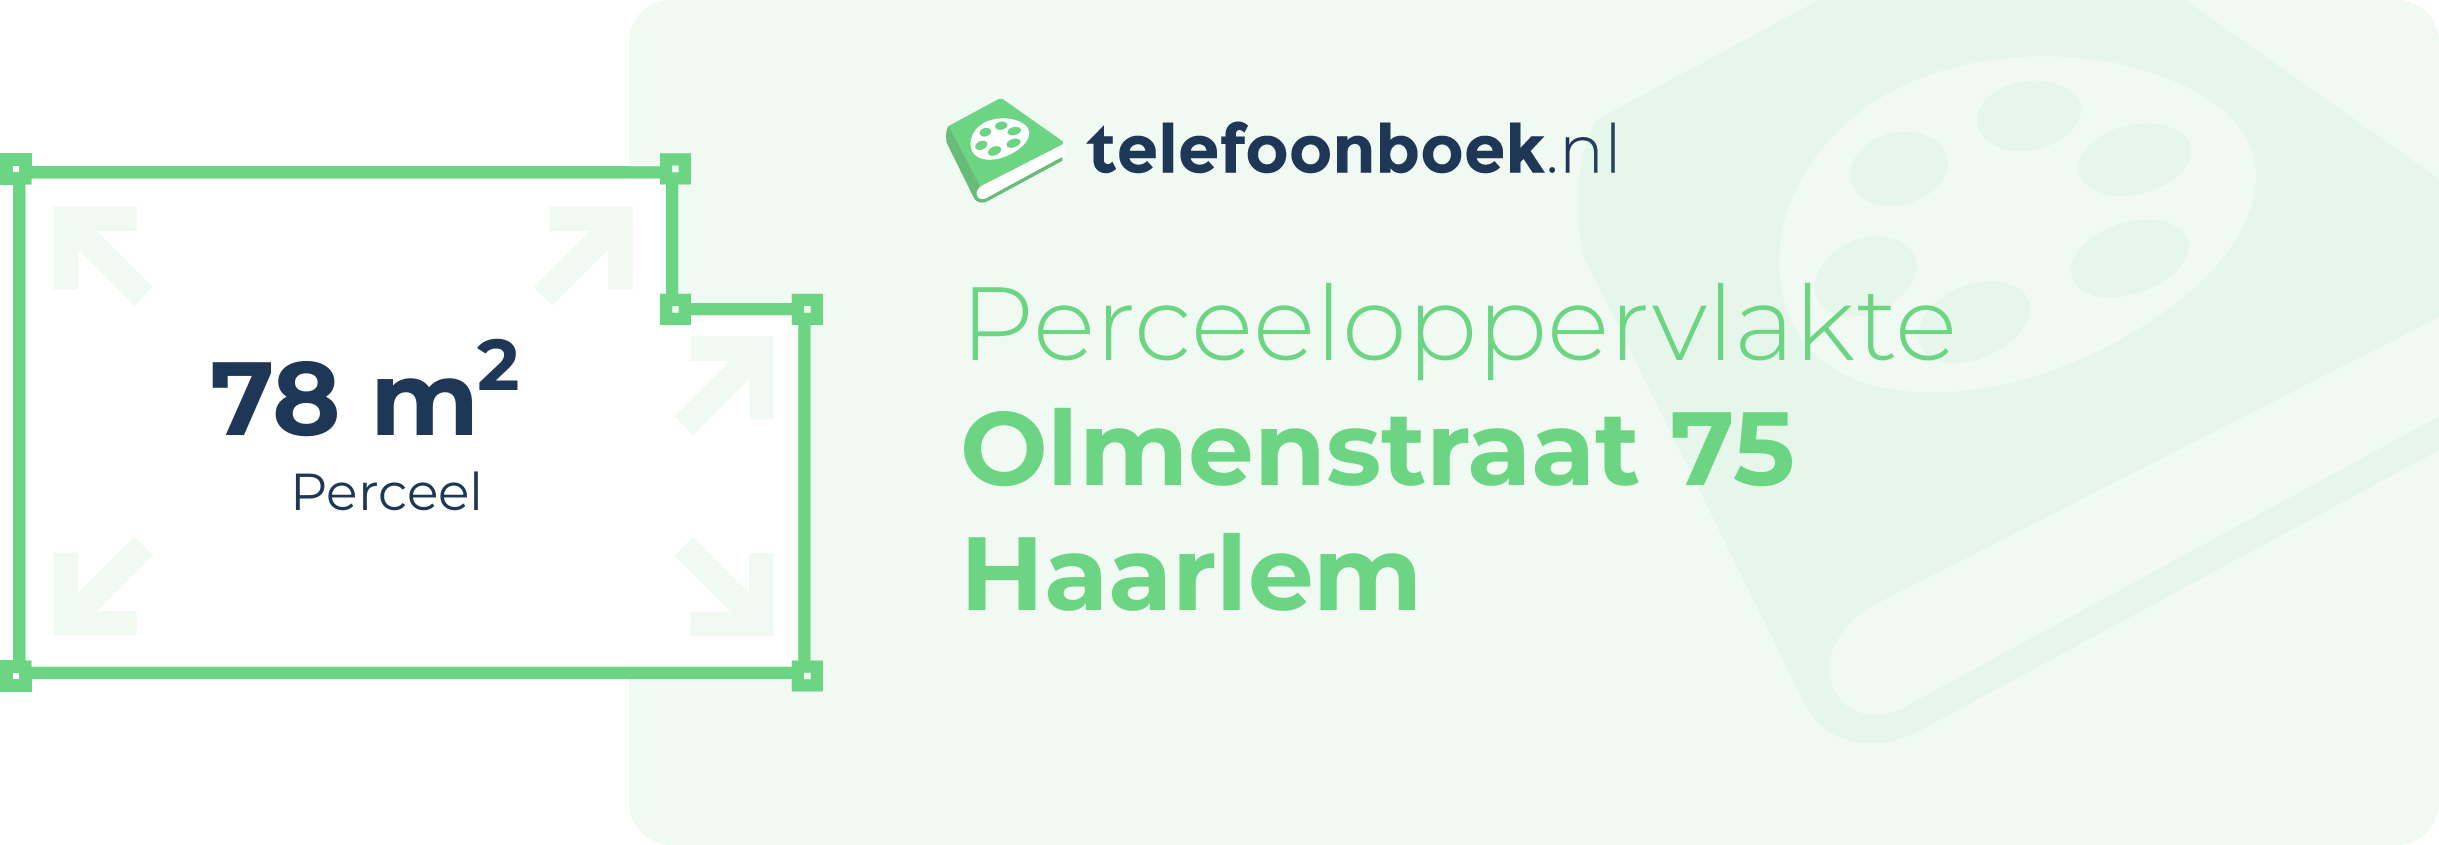 Perceeloppervlakte Olmenstraat 75 Haarlem